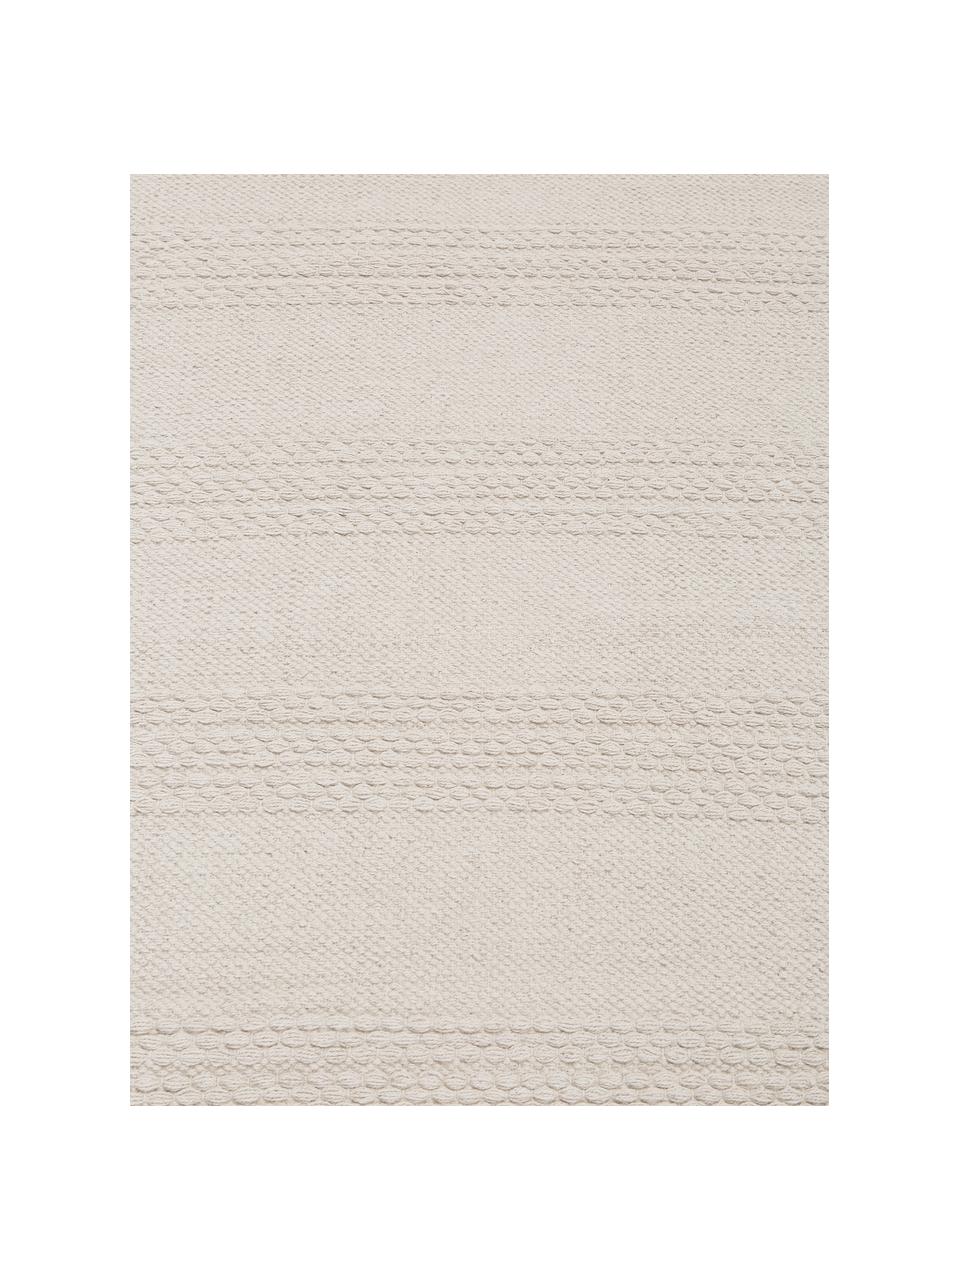 Tapis de couloir blanc Vanya, 100 % coton, Blanc, Larg. 70 x long. 200 cm